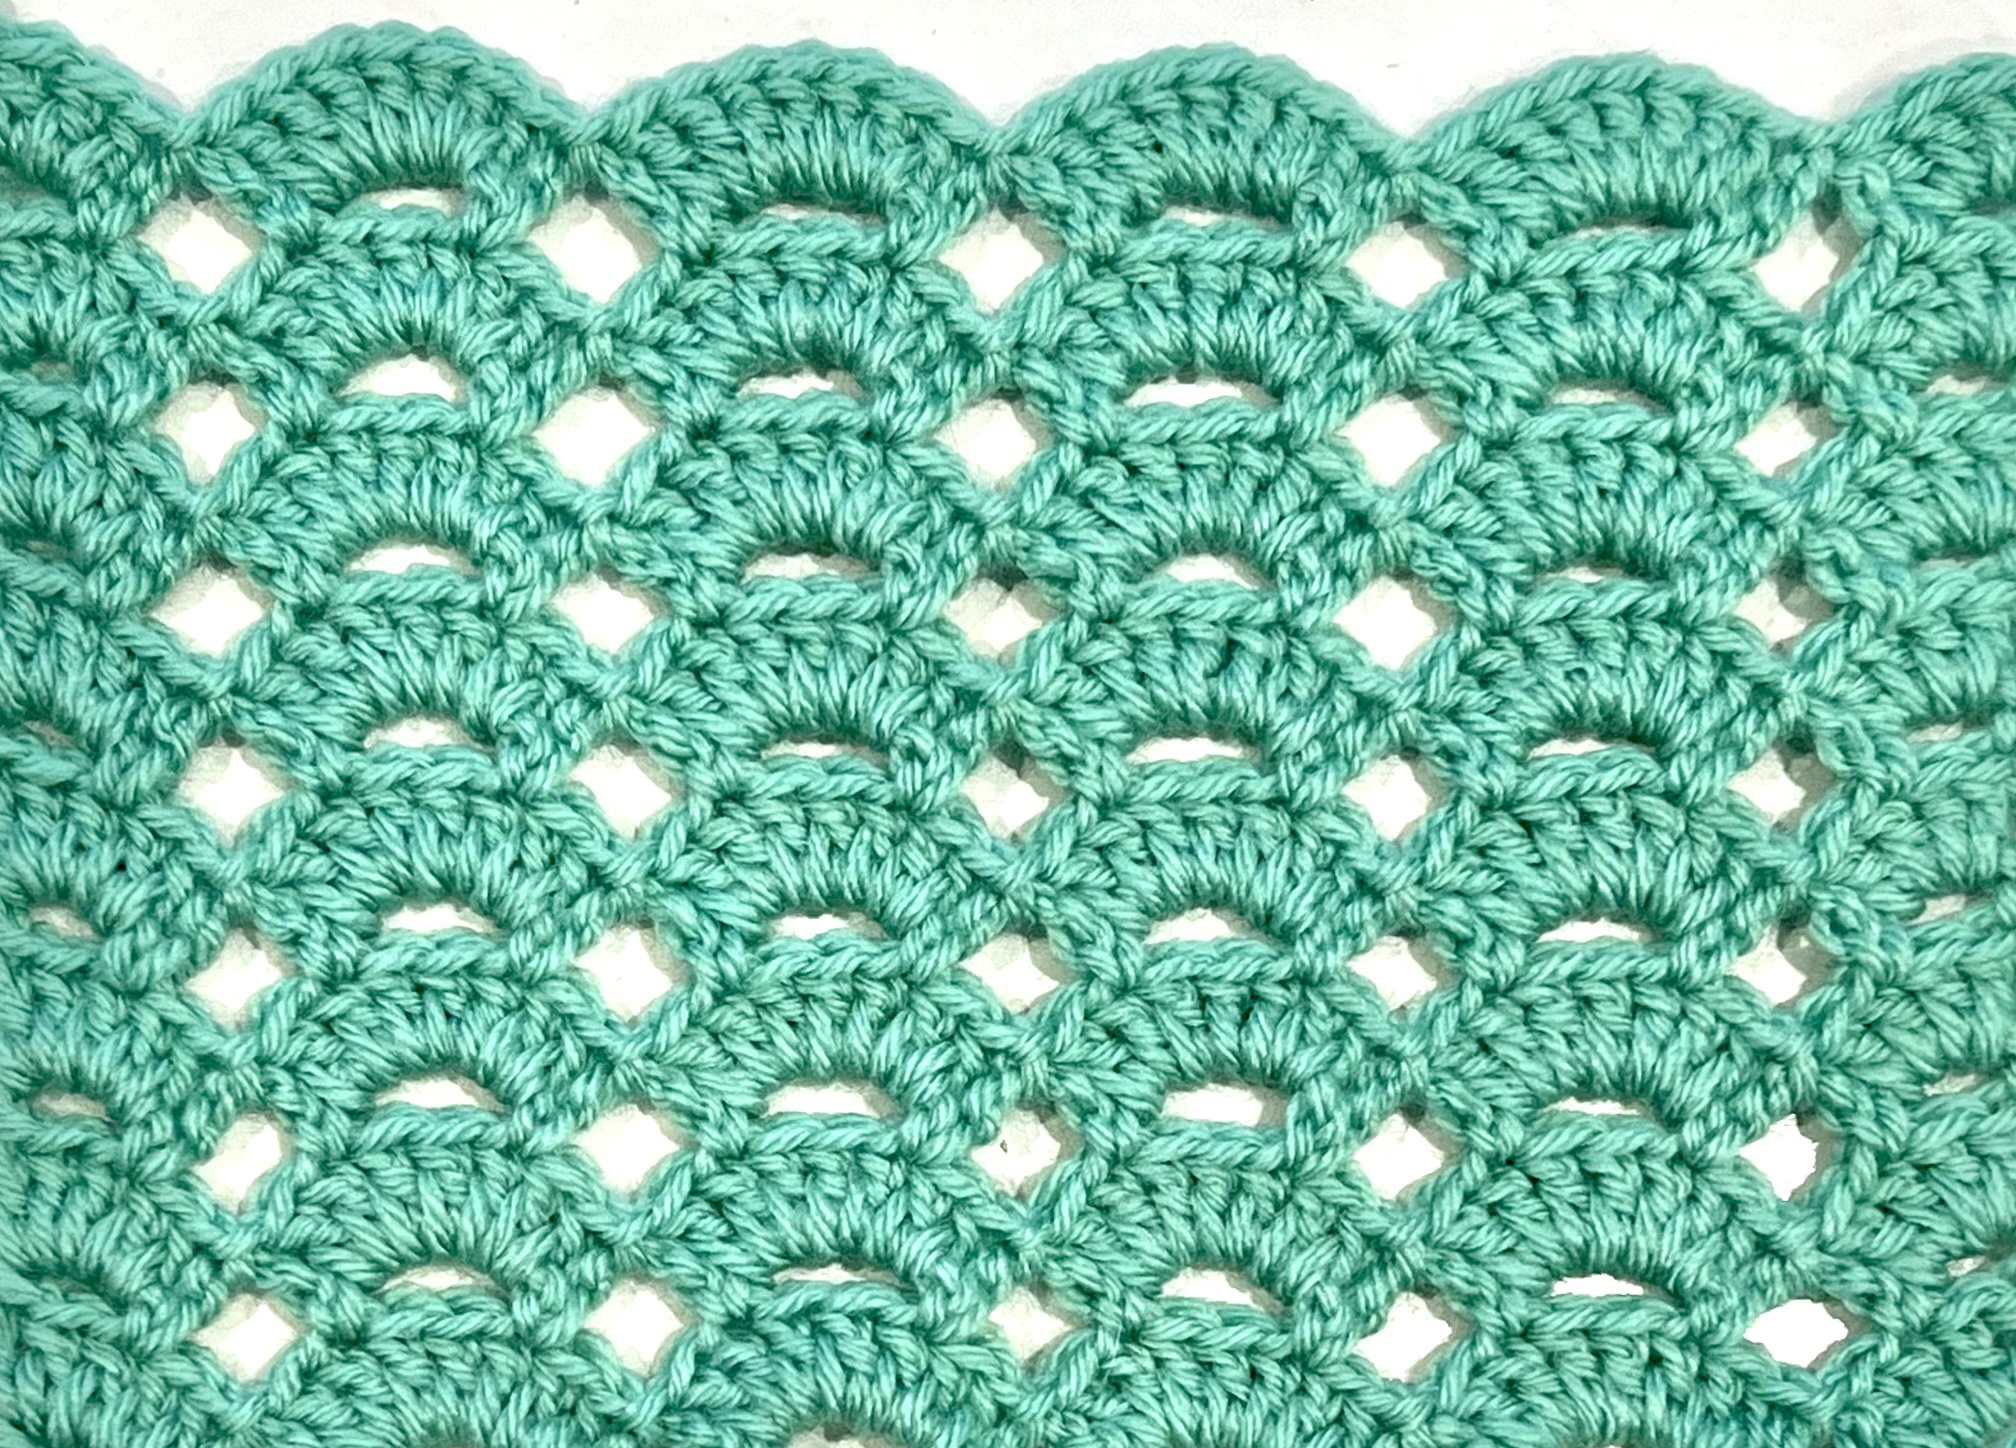 Crochet lace pattern - Knit and Crochet Design